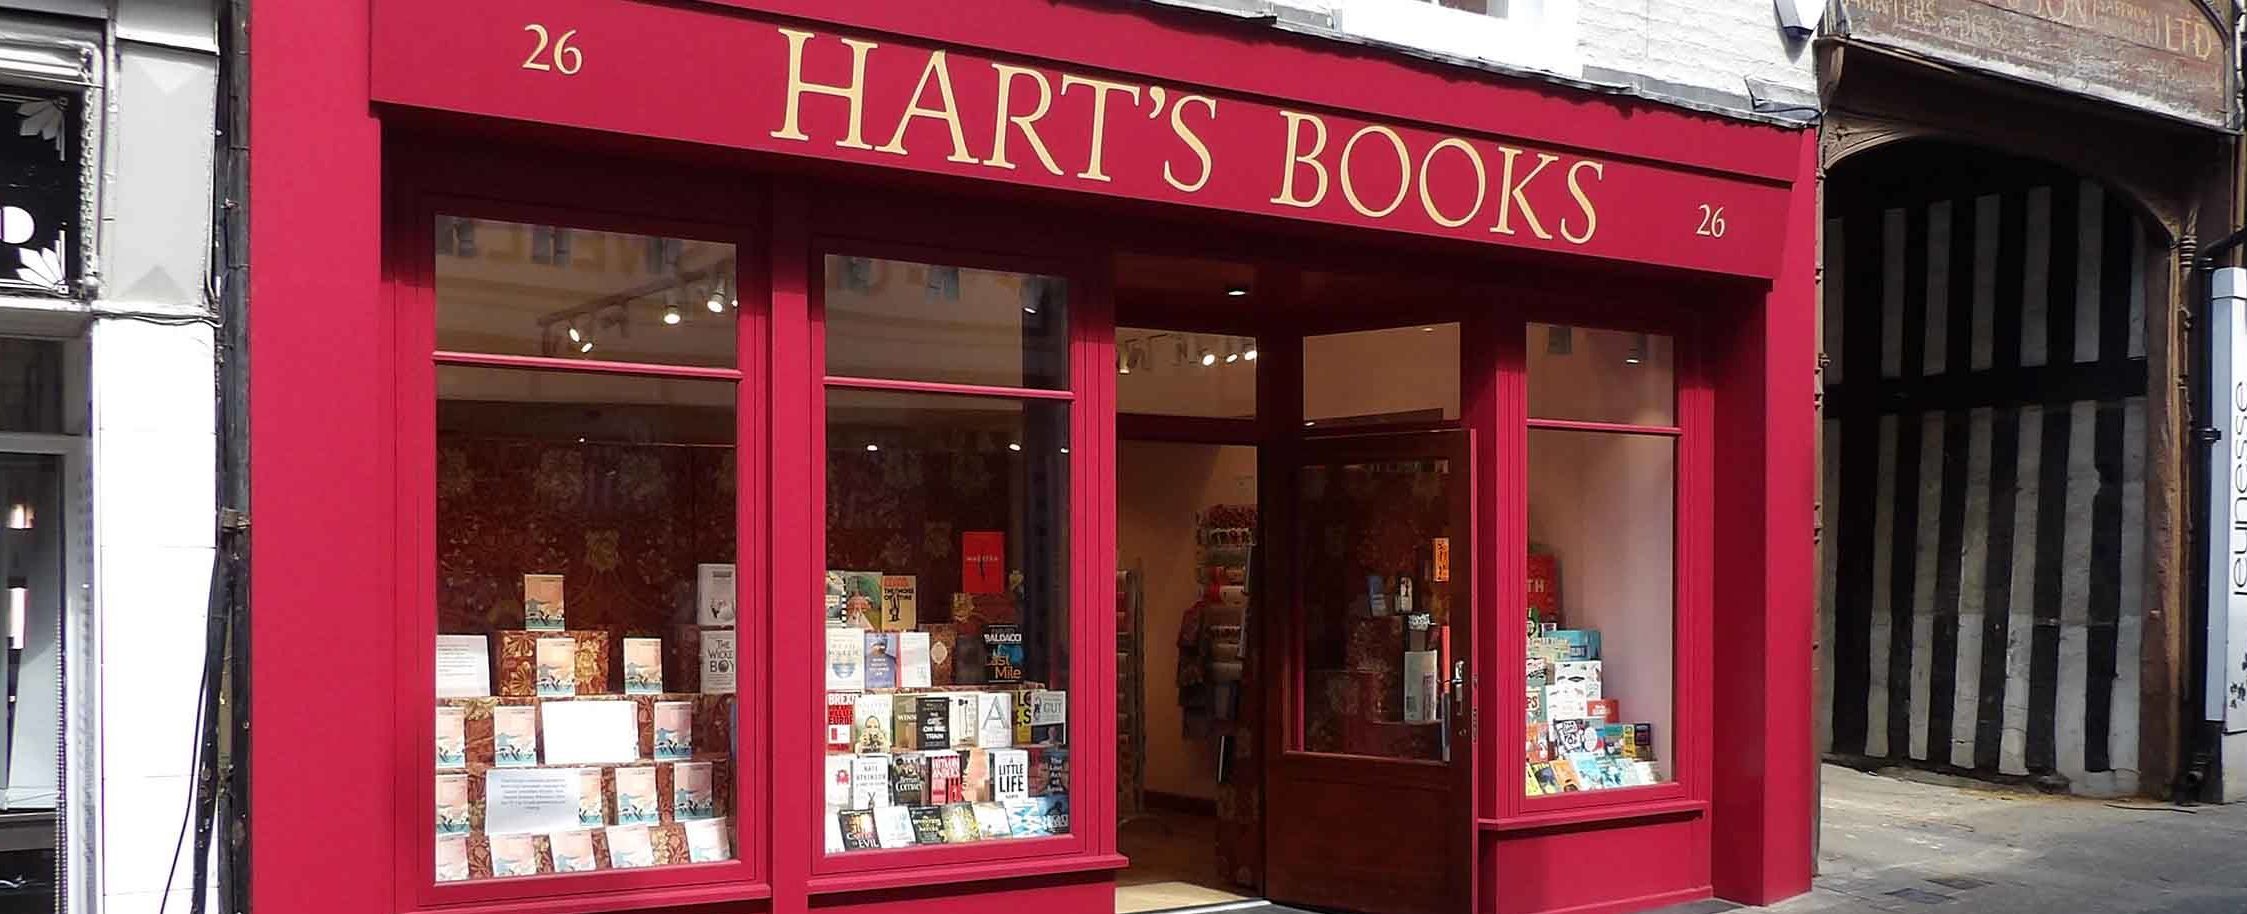 Hart's Books